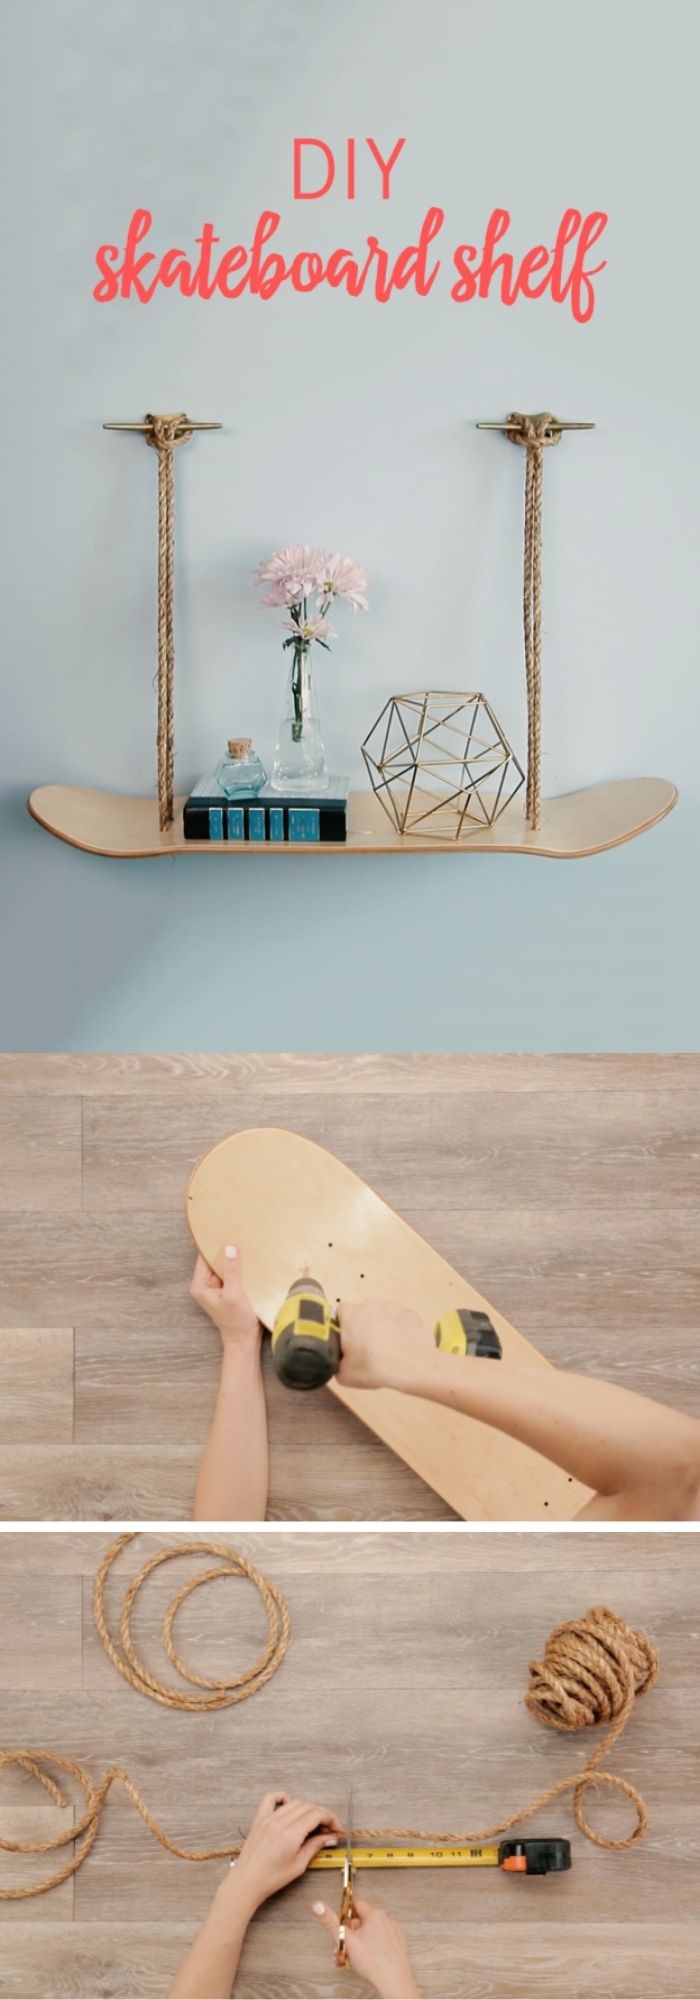 DIY Skateboard Shelf Easy DIY Bookshelf Ideas and Plans